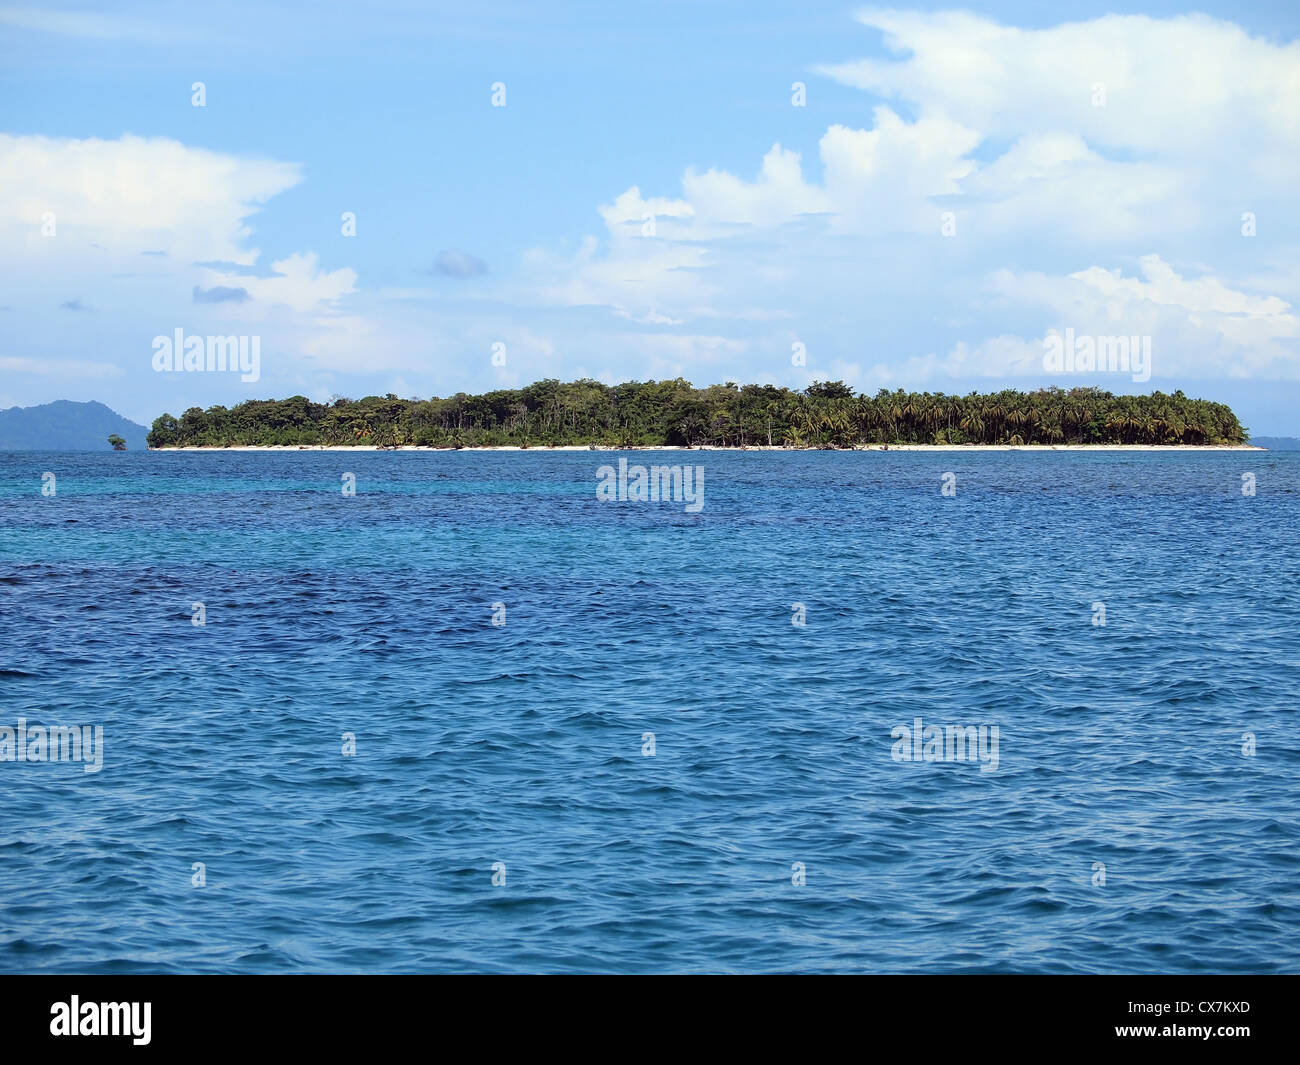 Unspoiled Caribbean island with lush vegetation, Bocas del Toro, Panama Stock Photo